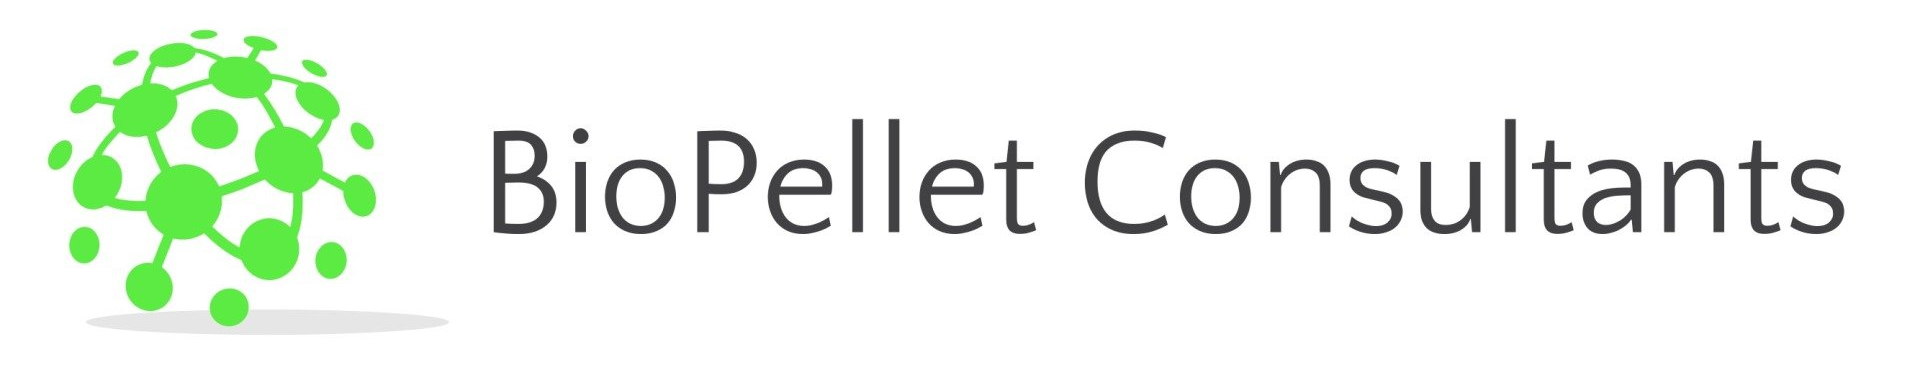 BioPellet Consultants logo